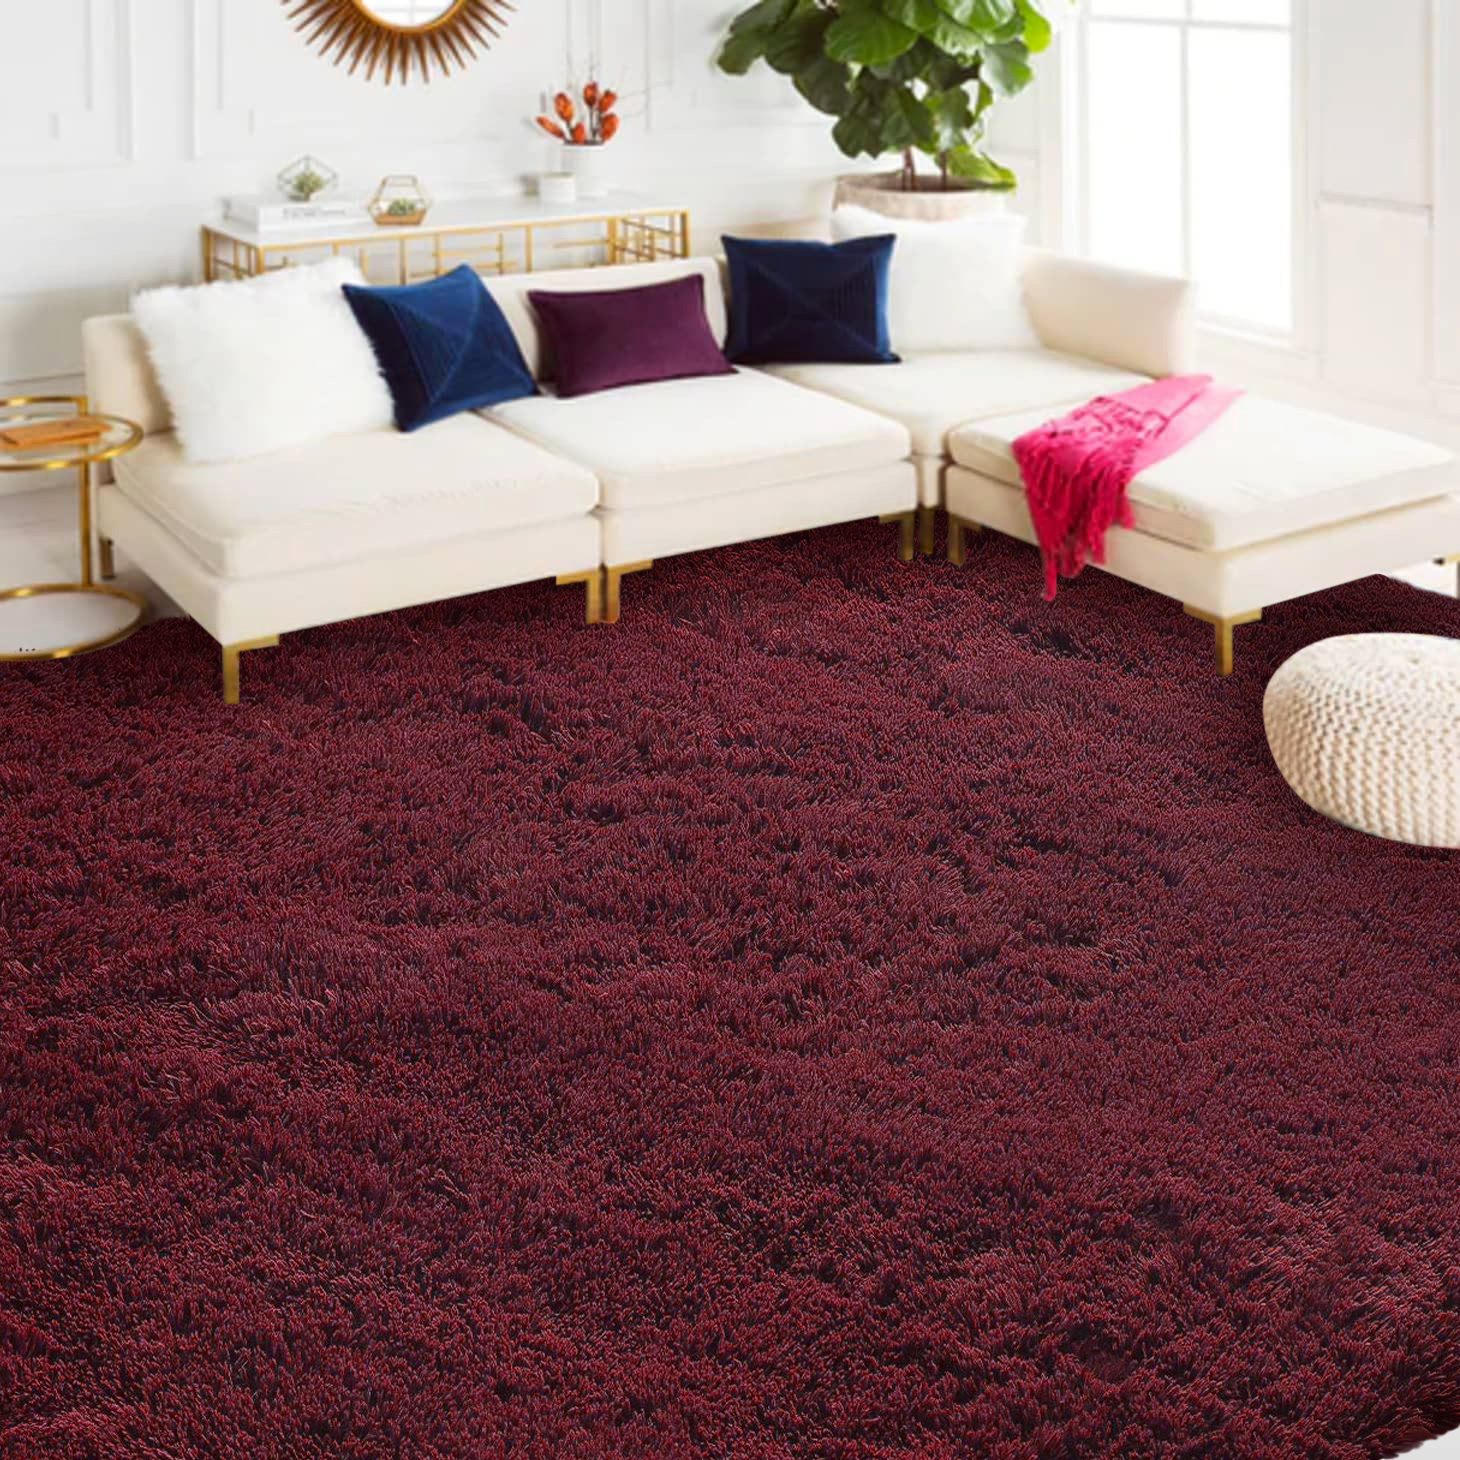 XL Extra Large Soft Shag Rug Carpet Mat (Wine, 300 x 200)